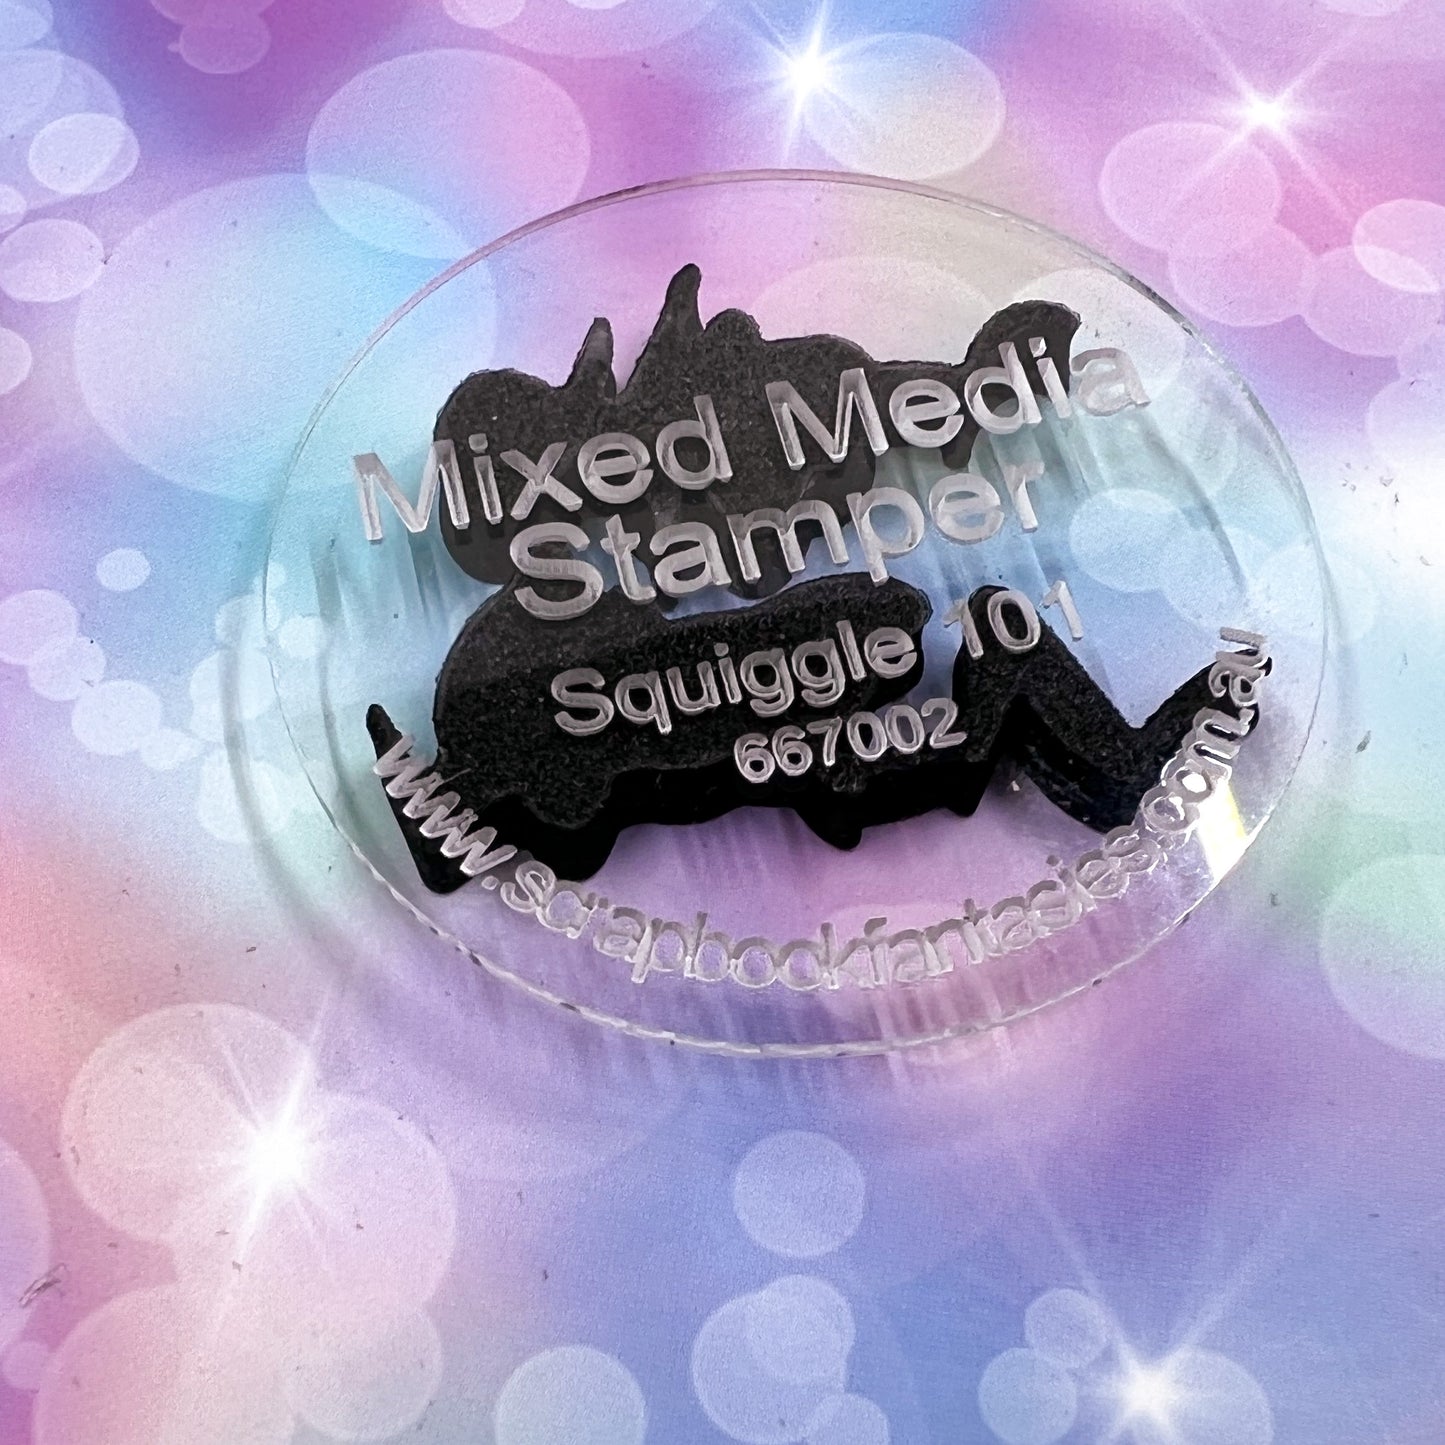 Mixed Media Stamper - Foam Stamp - Squiggle 101 667002